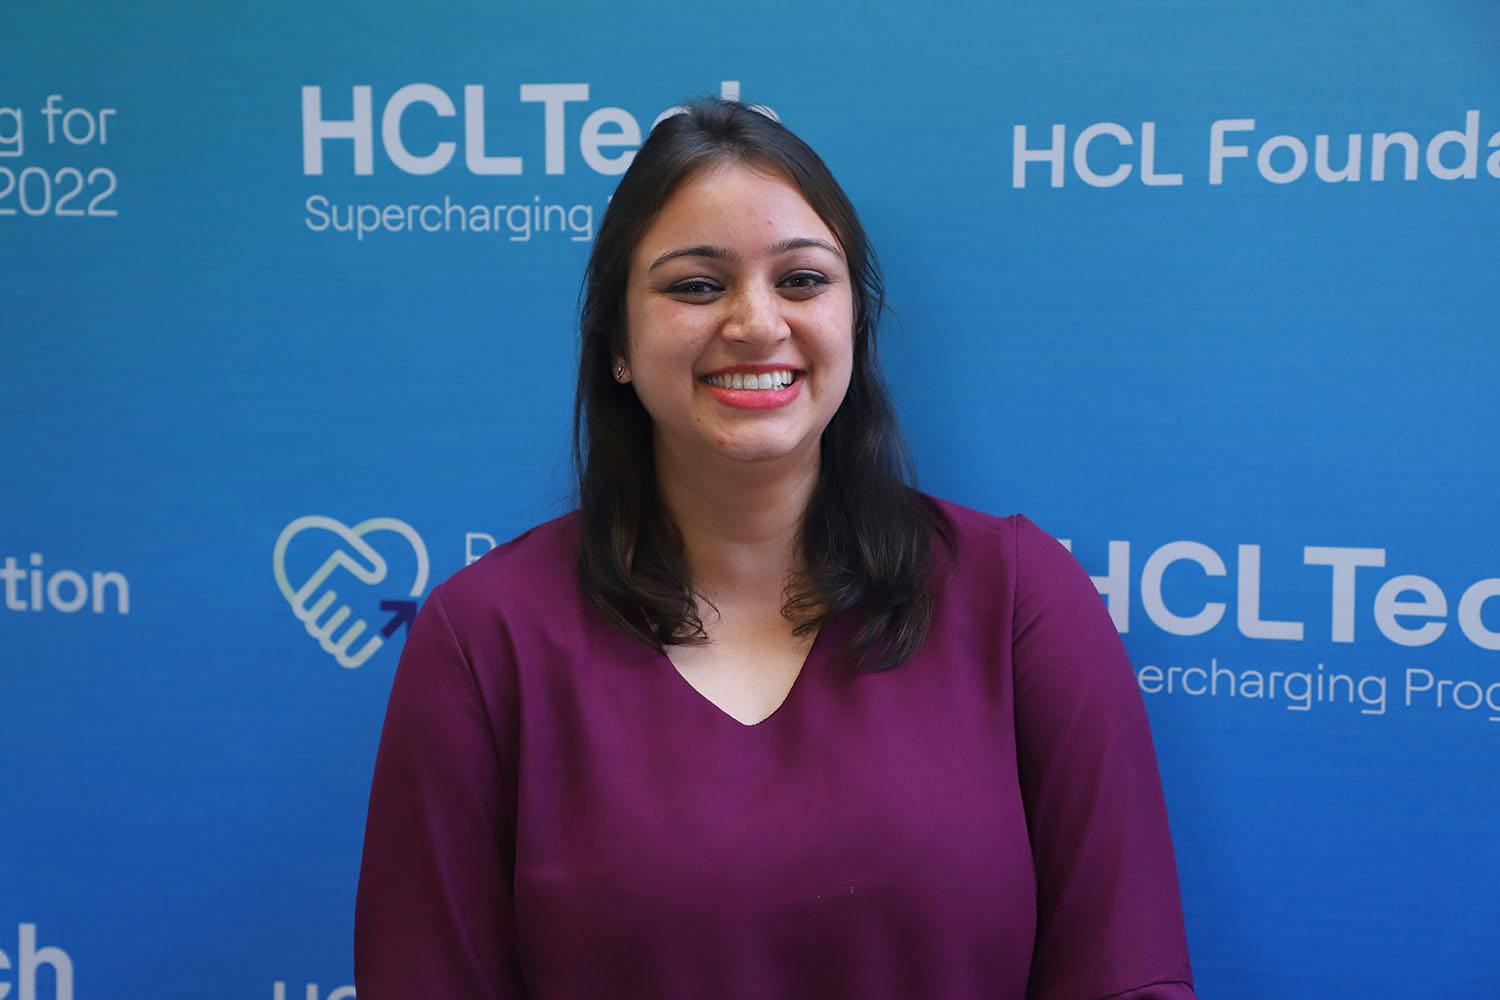 Spreading Smiles through HCL Foundation